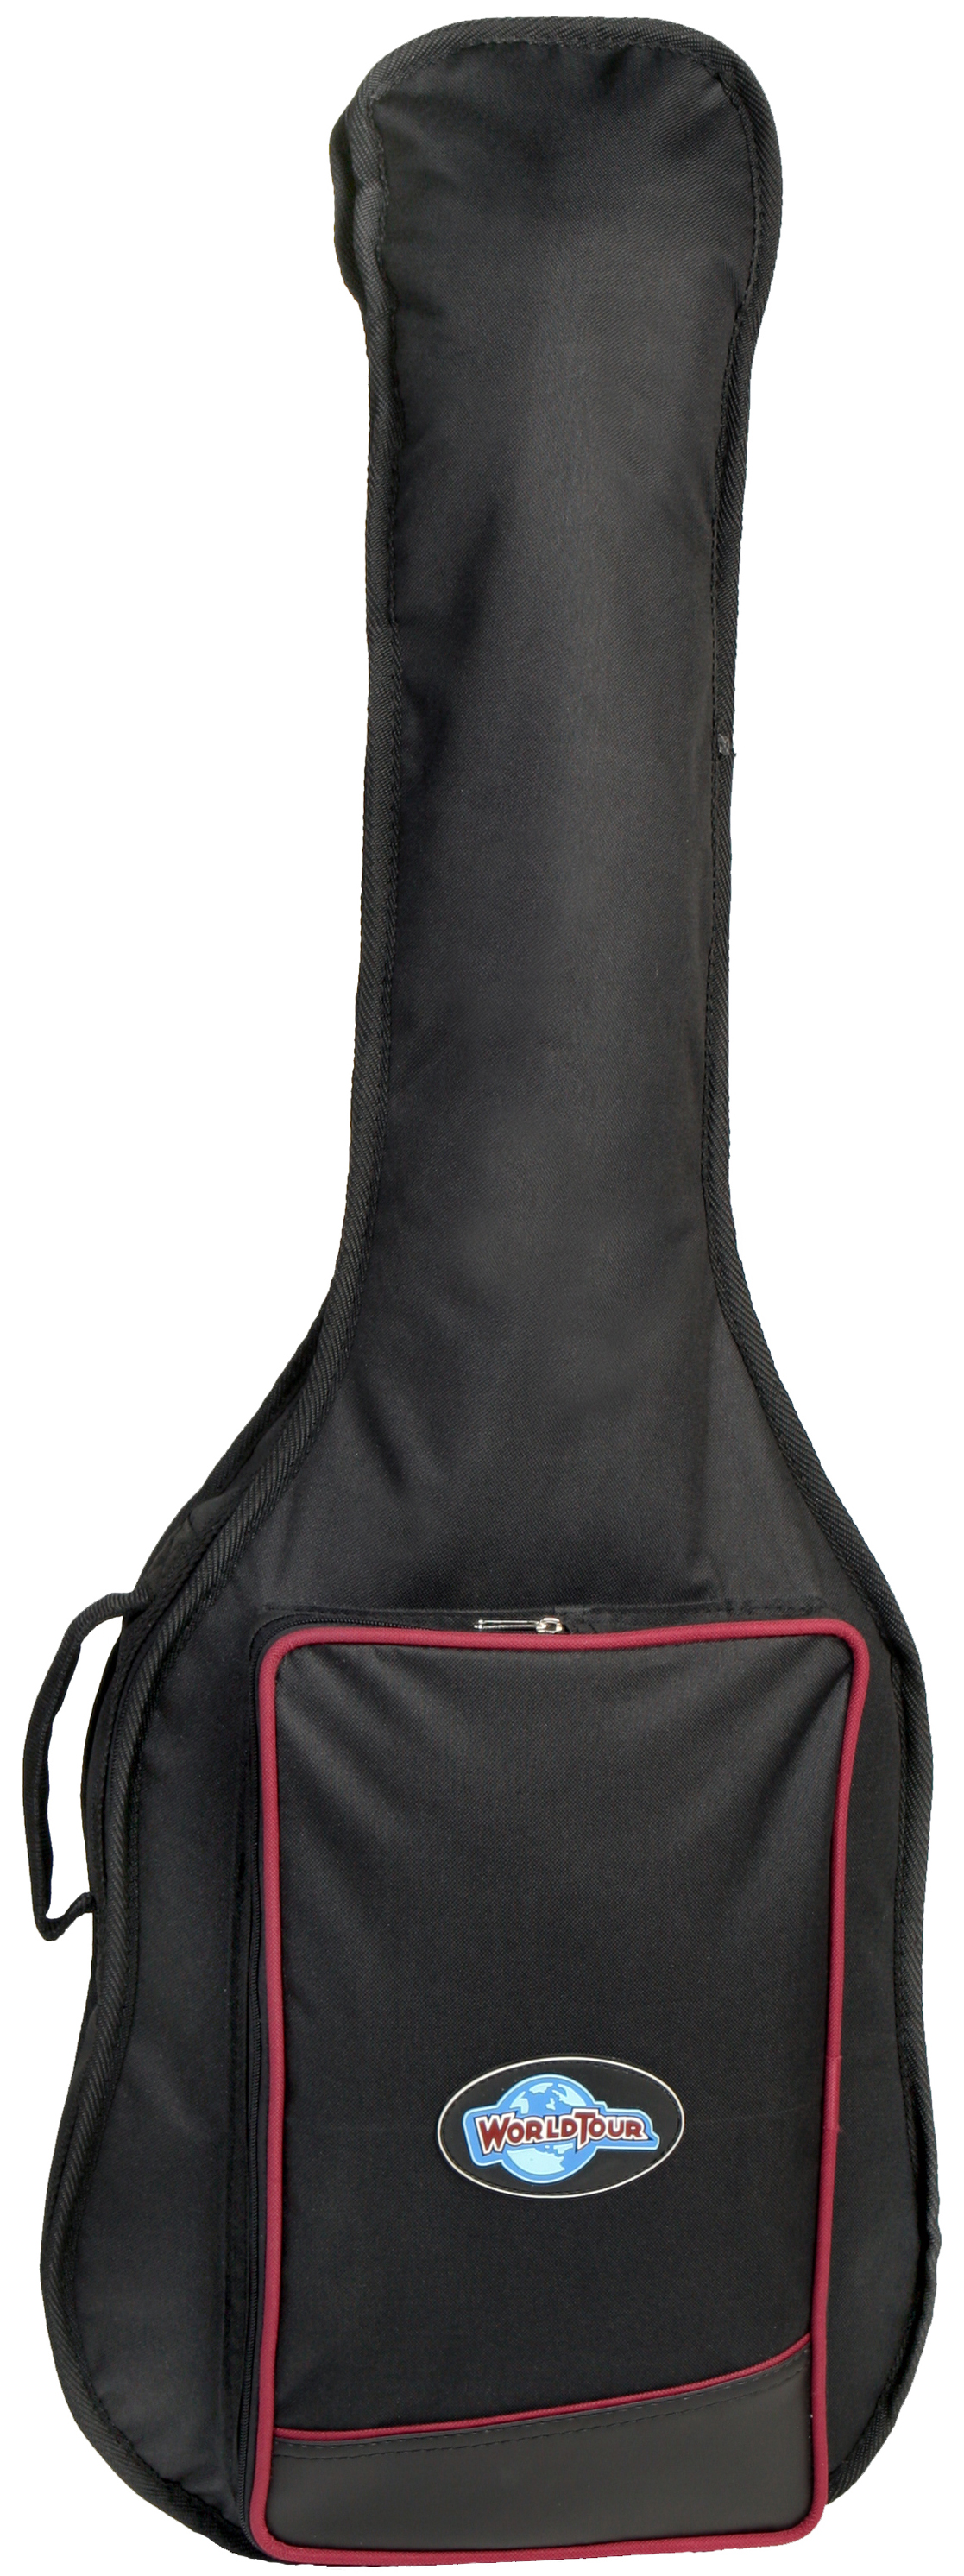 World Tour World Tour Padded Classical Guitar Bag